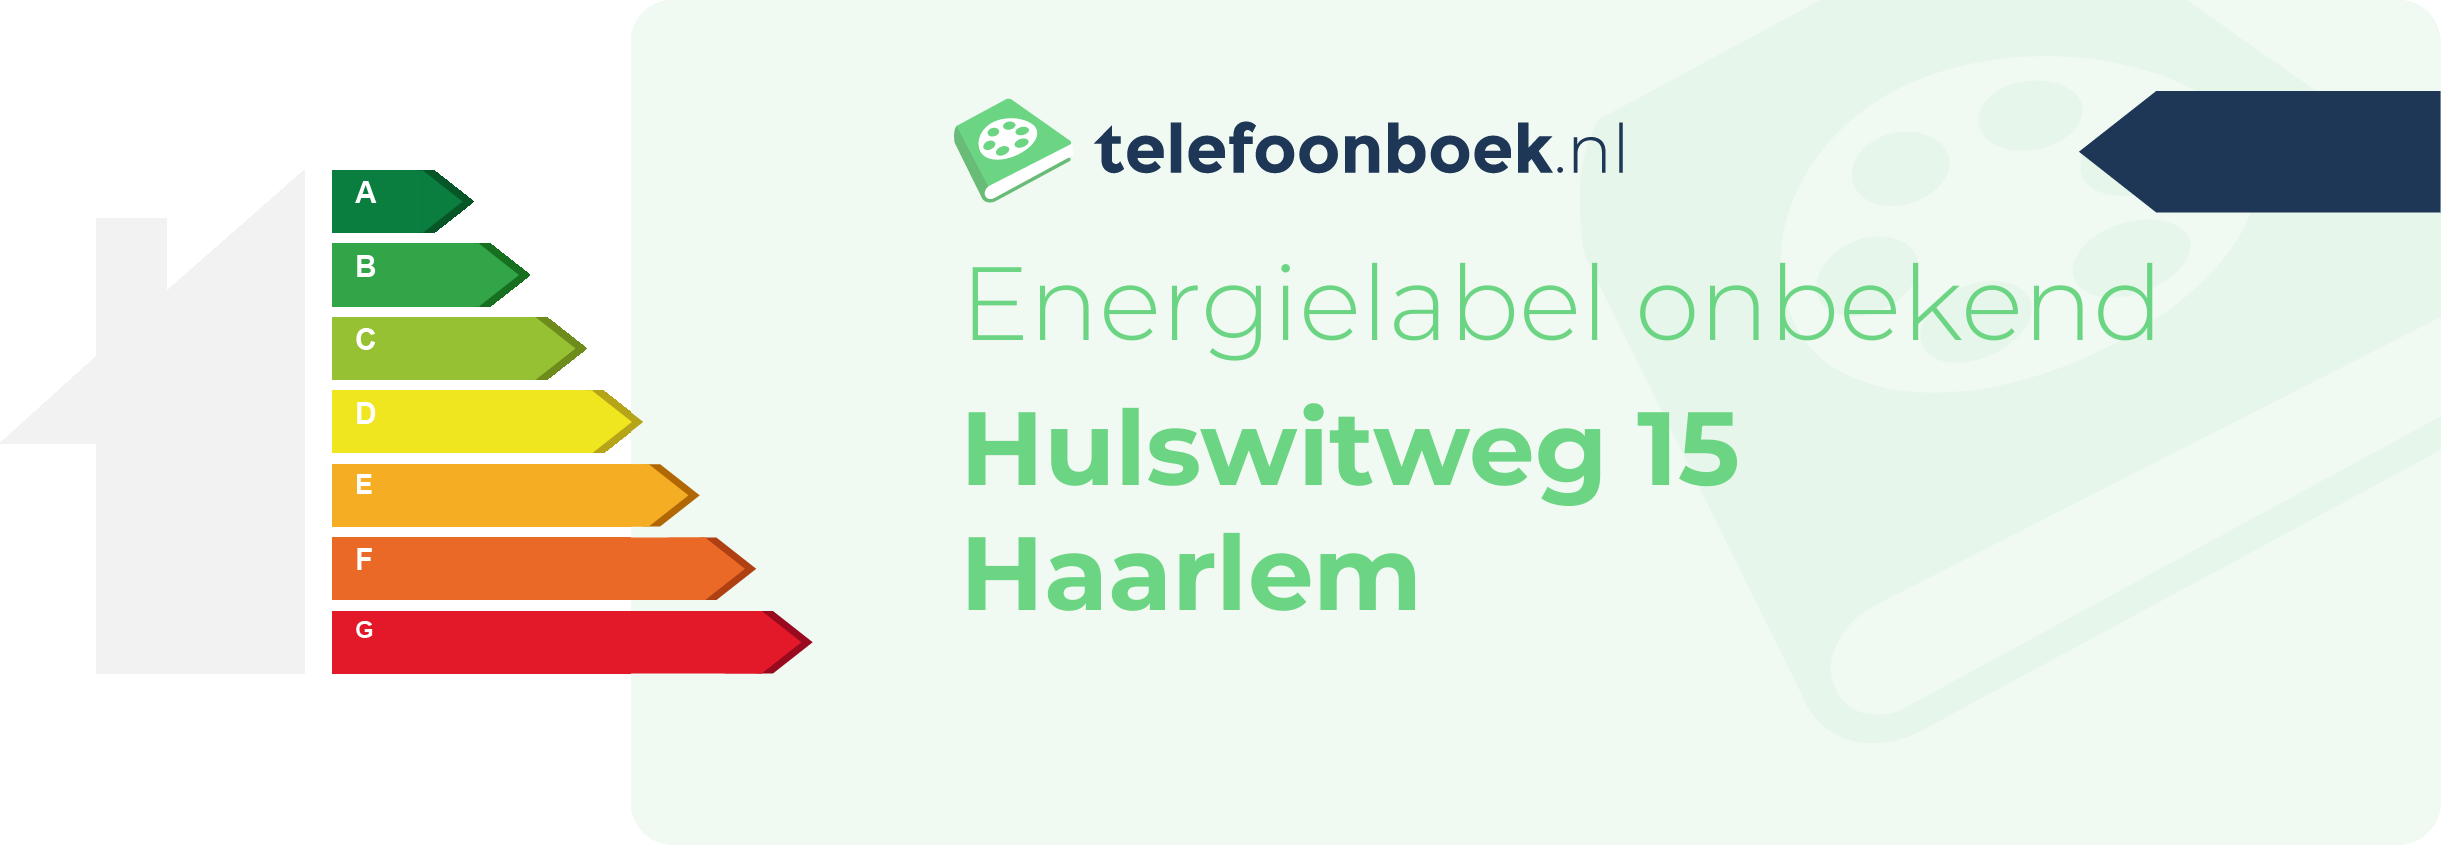 Energielabel Hulswitweg 15 Haarlem